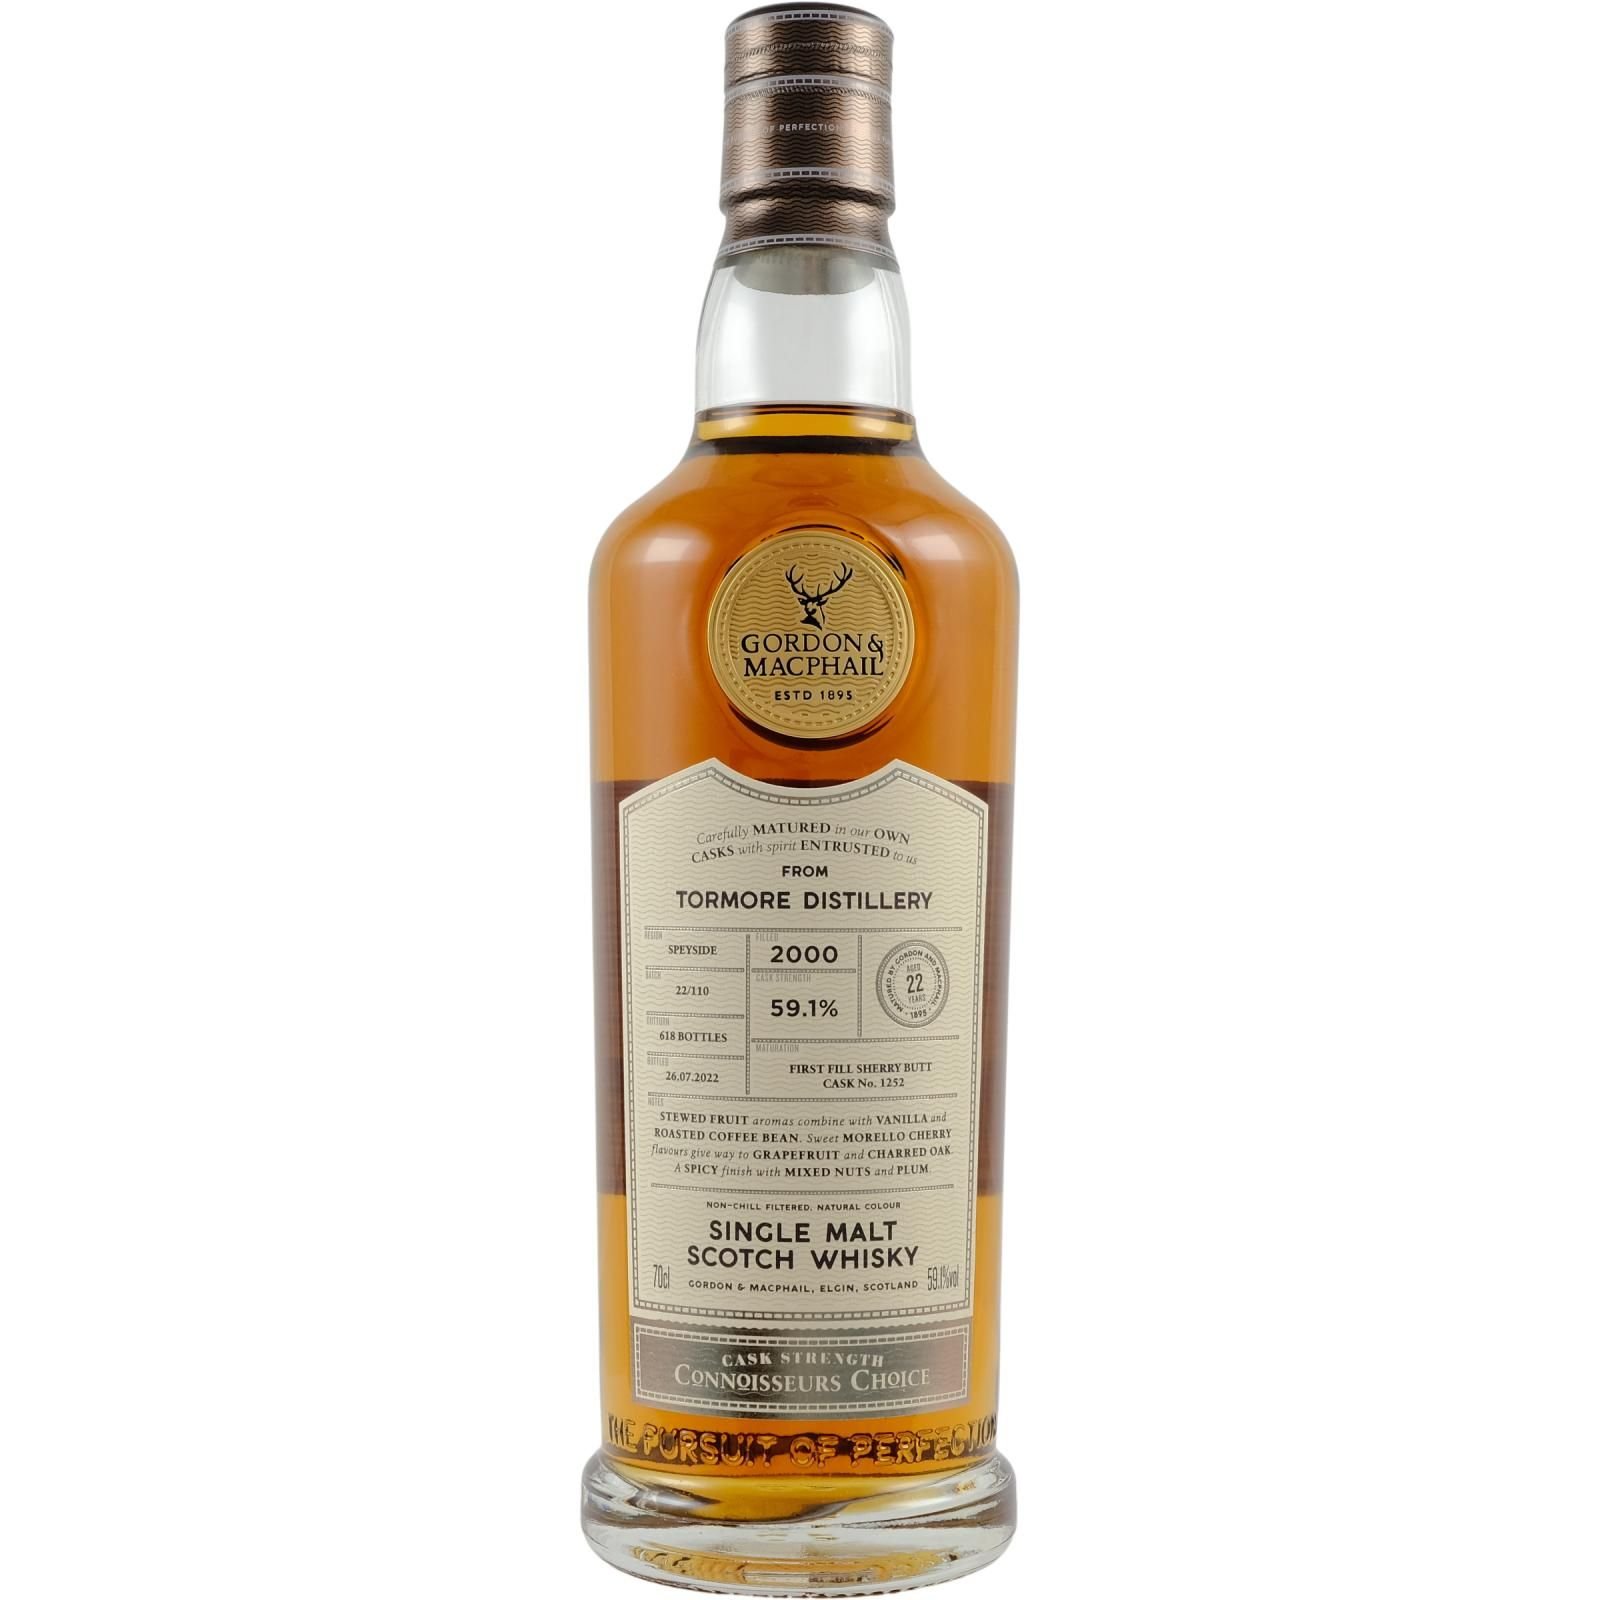 Віскі Gordon & MacPhail Tormore Connoisseurs Choice 2000 Single Malt Scotch Whisky 59.1% 0.7 л, у подарунковій упаковці - фото 2